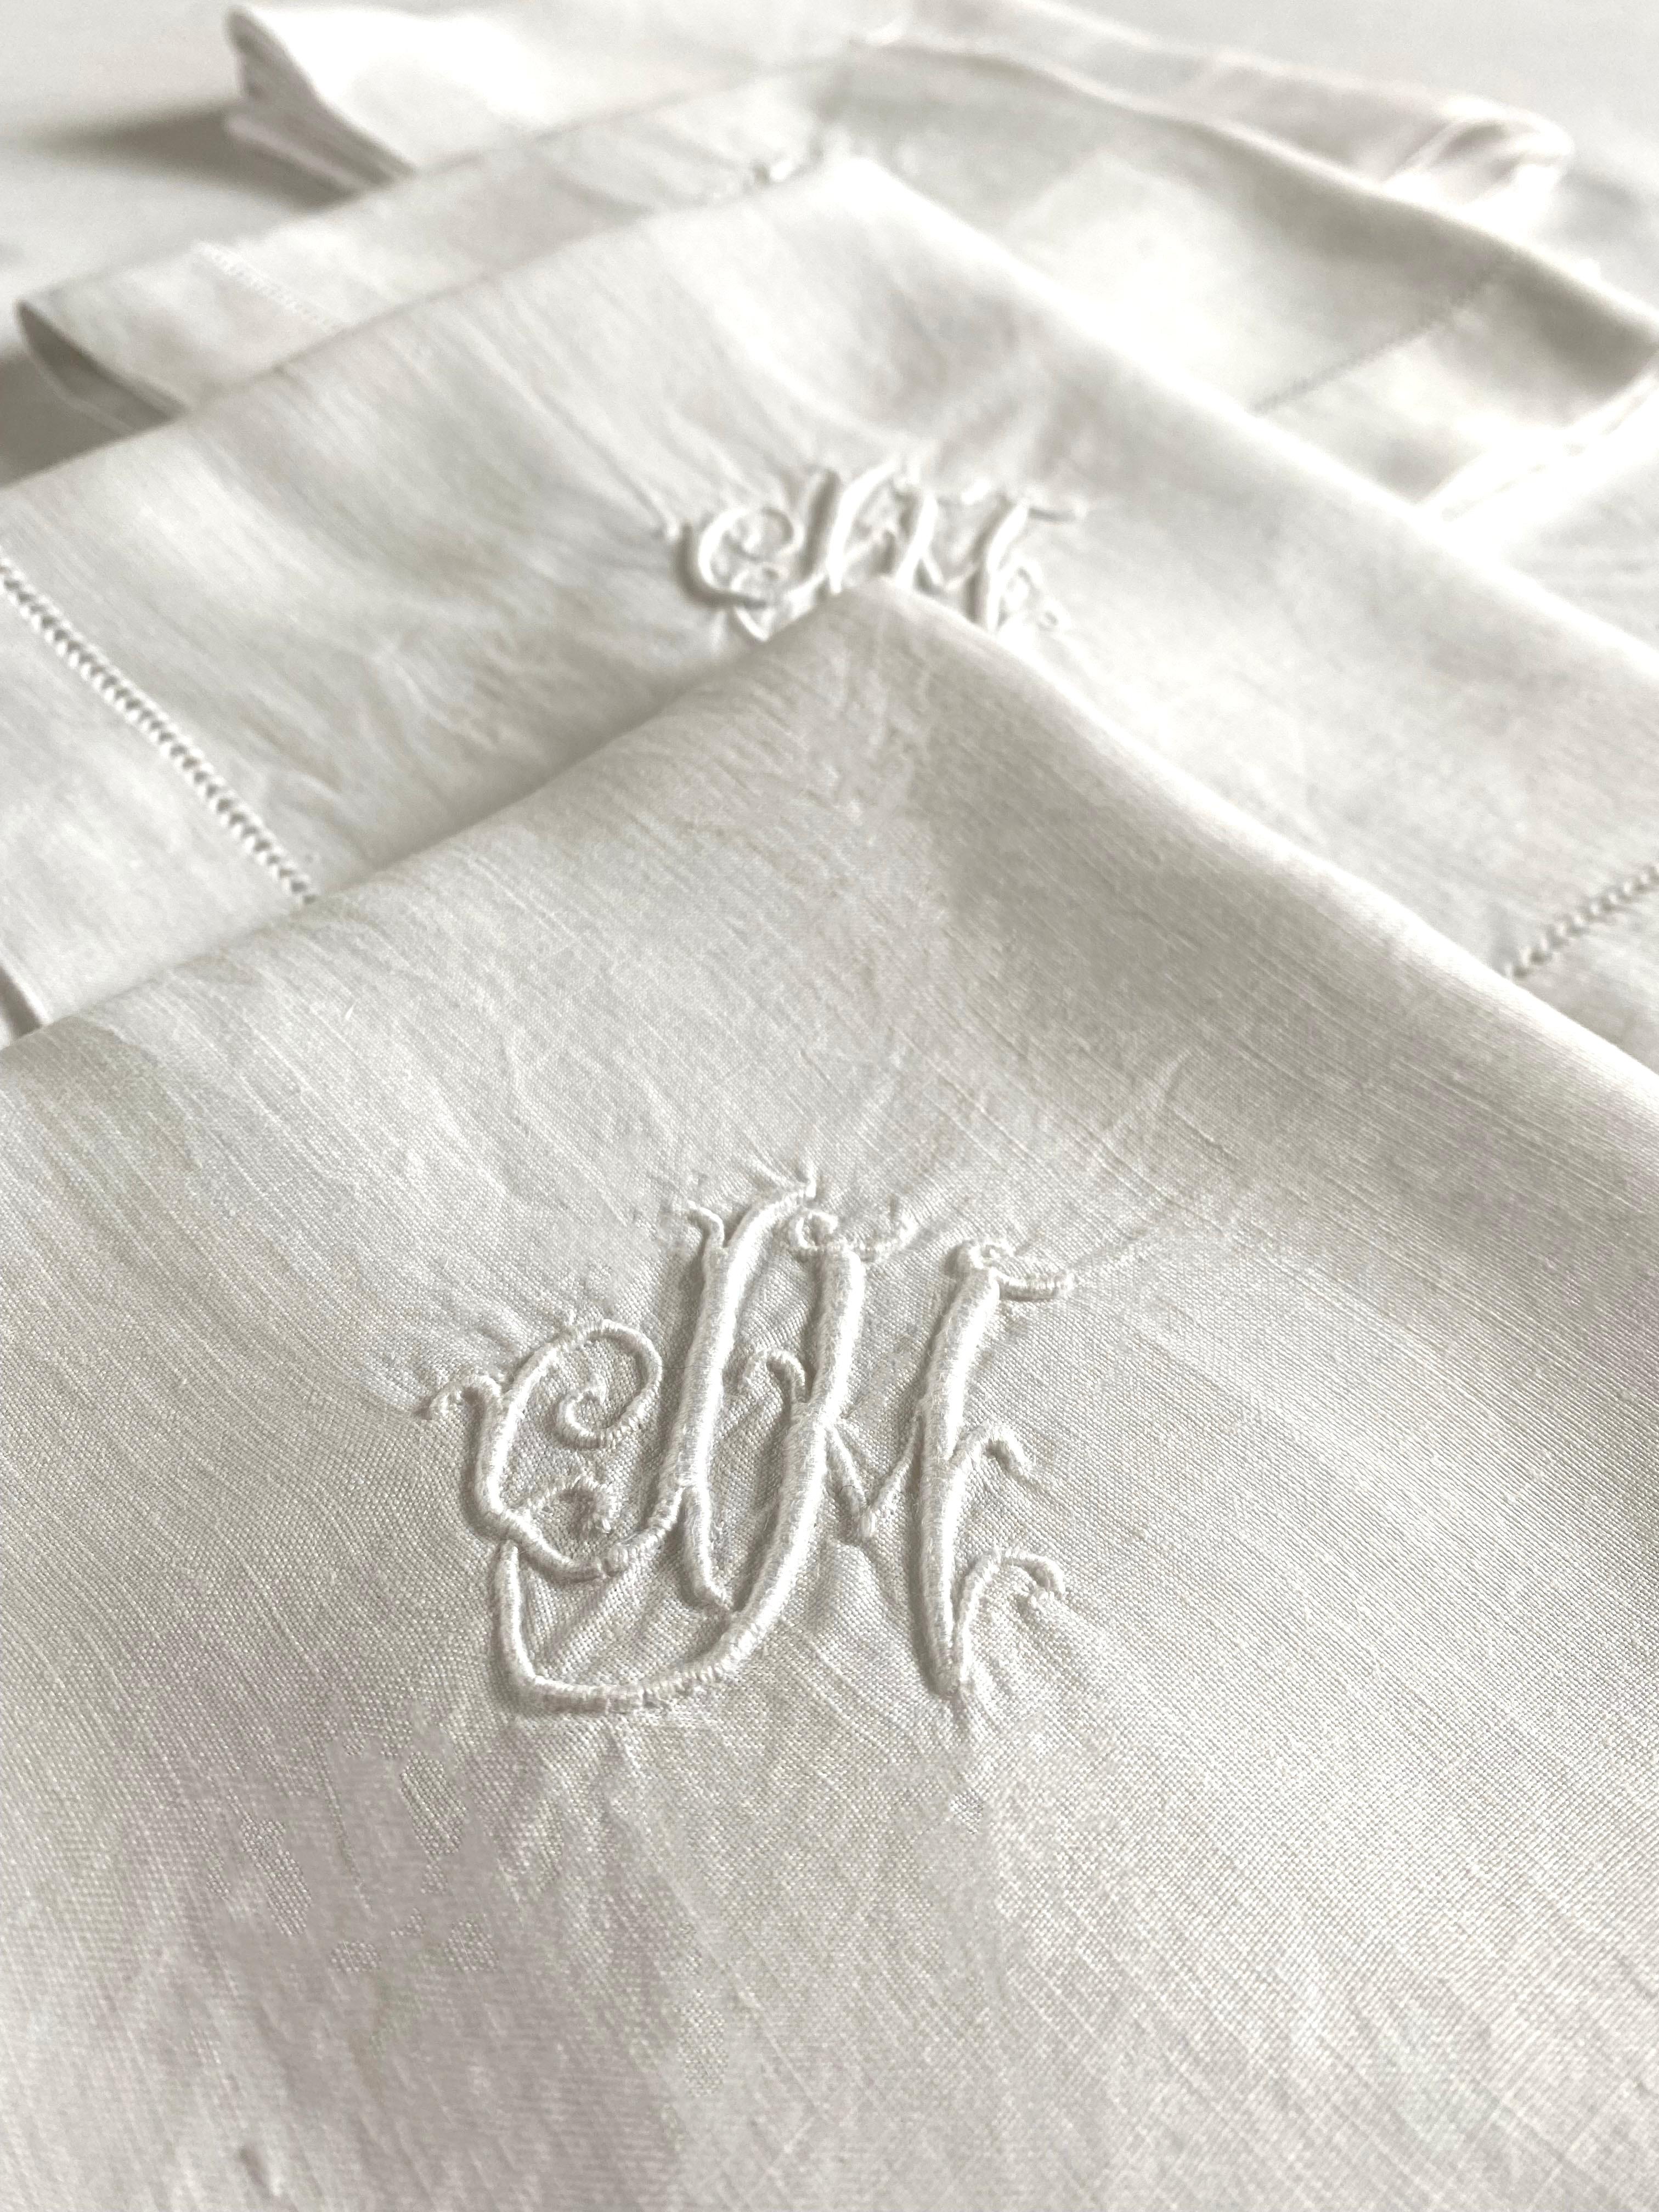 Antique french white linen tablecloth and napkin set, circa 1900 Art Nouveau 2